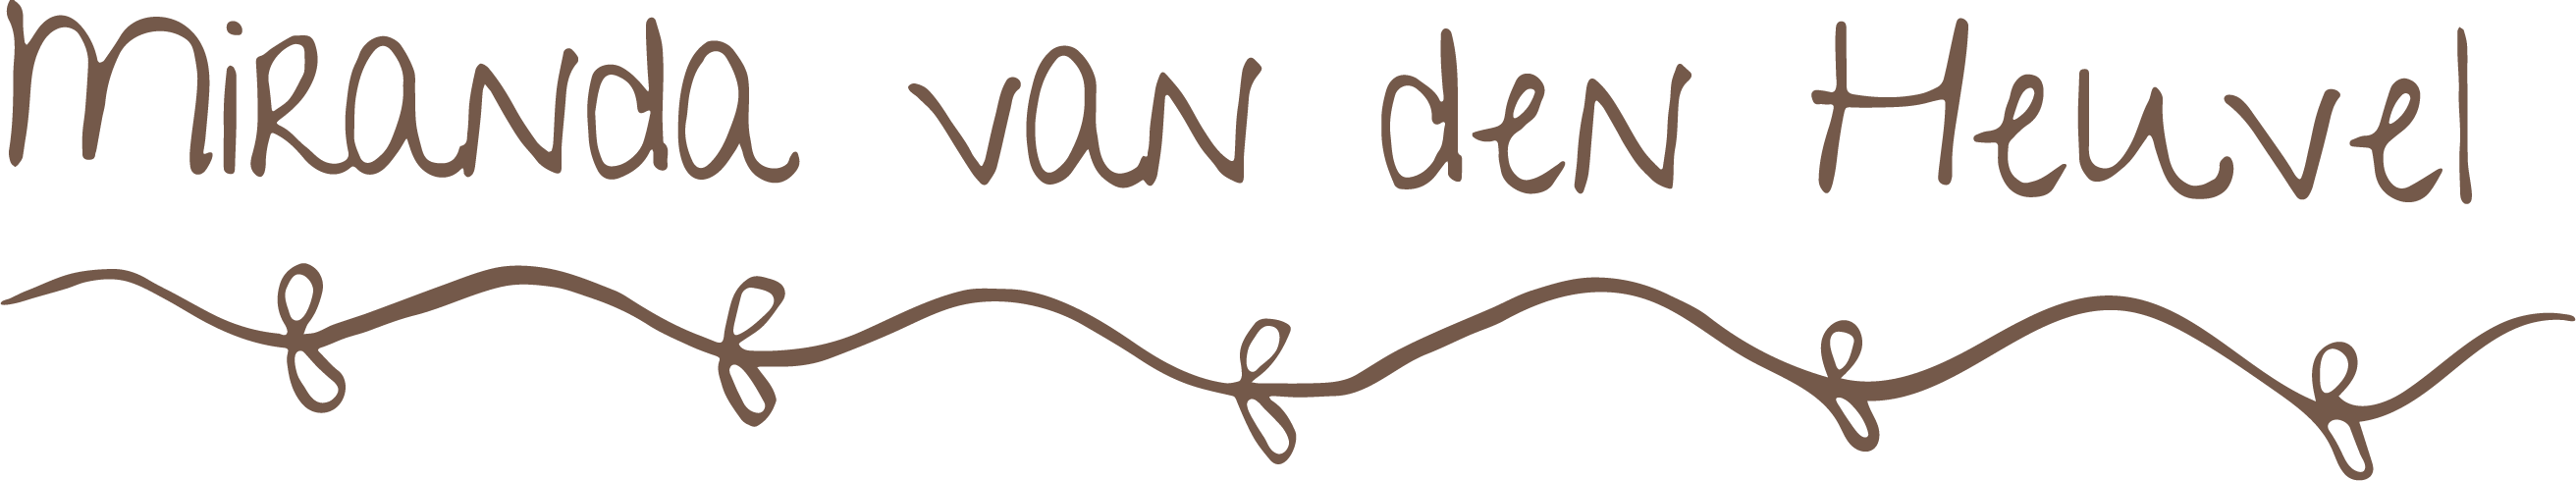 Miranda van den Heuvel Logo